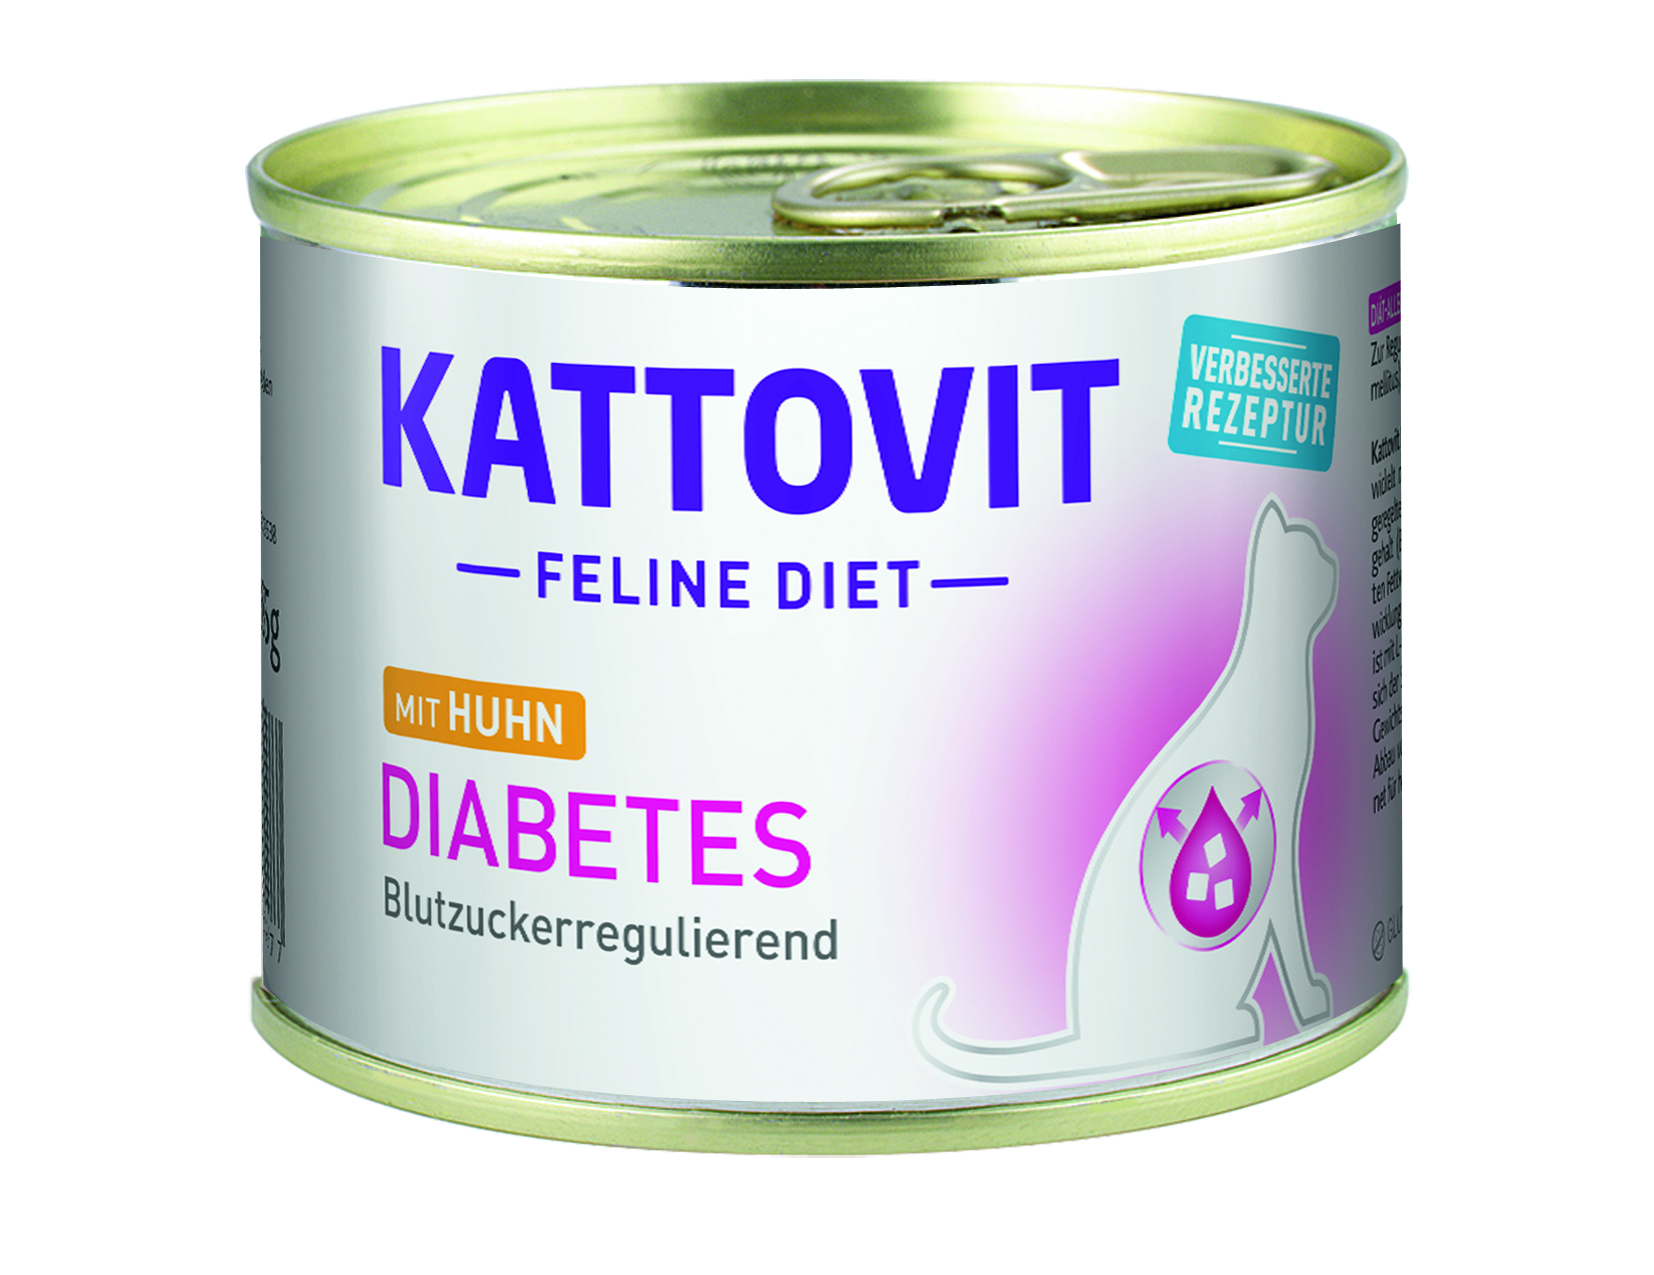 Kattovit Feline Diet Diabetes/Gewicht Huhn 185g